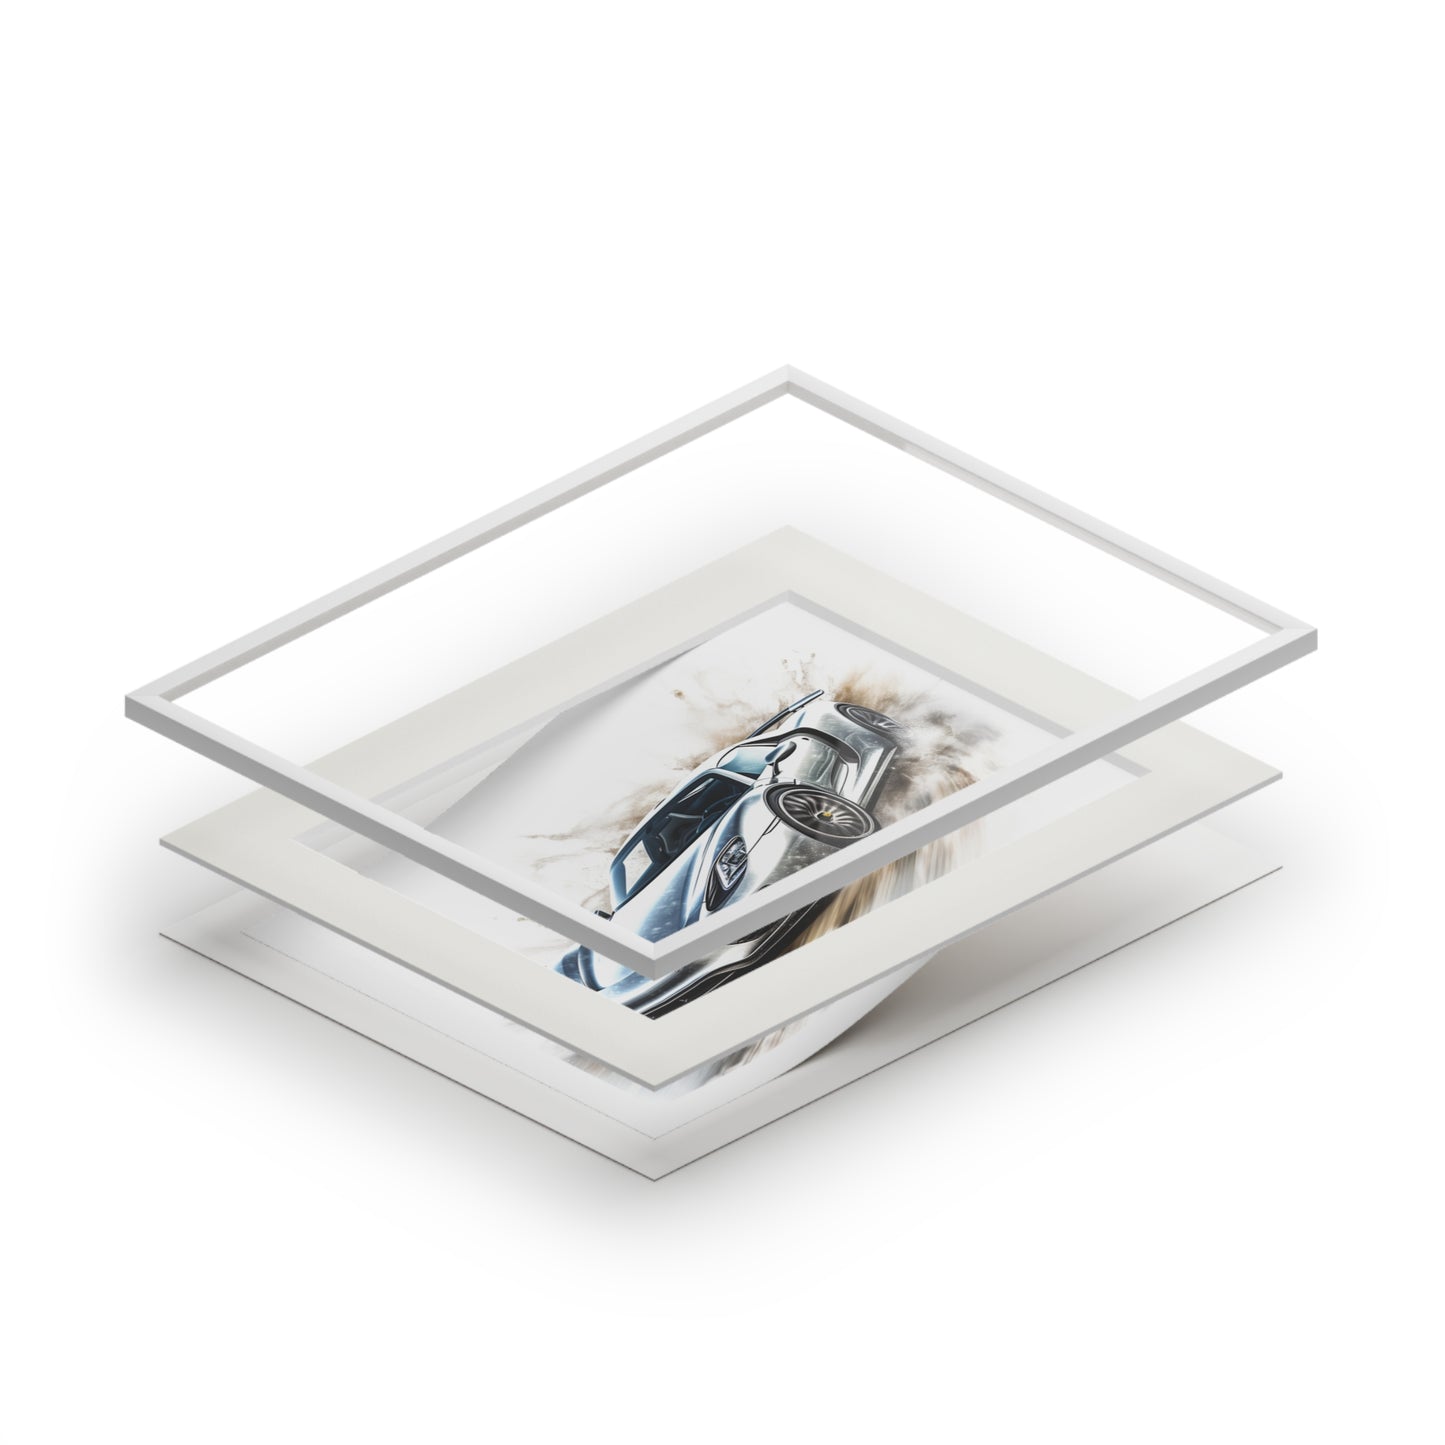 Fine Art Prints (Passepartout Paper Frame) 918 Spyder white background driving fast with water splashing 2